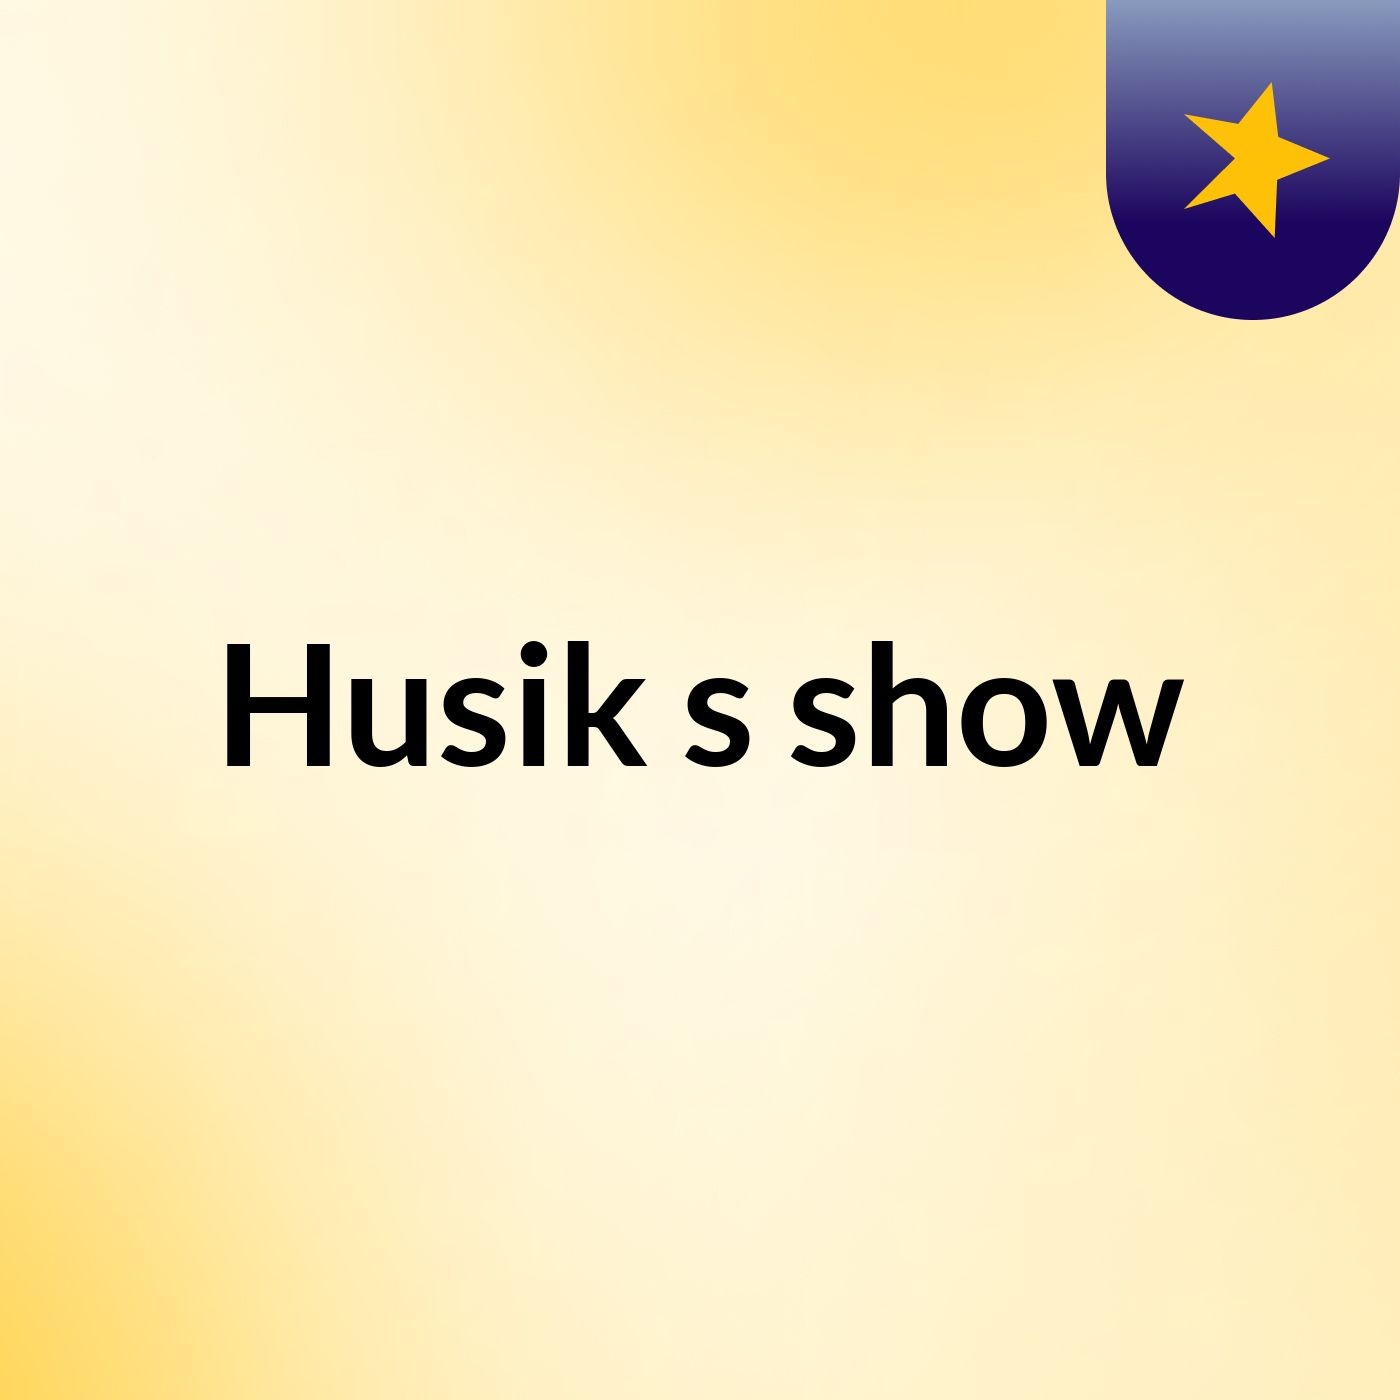 Husik's show